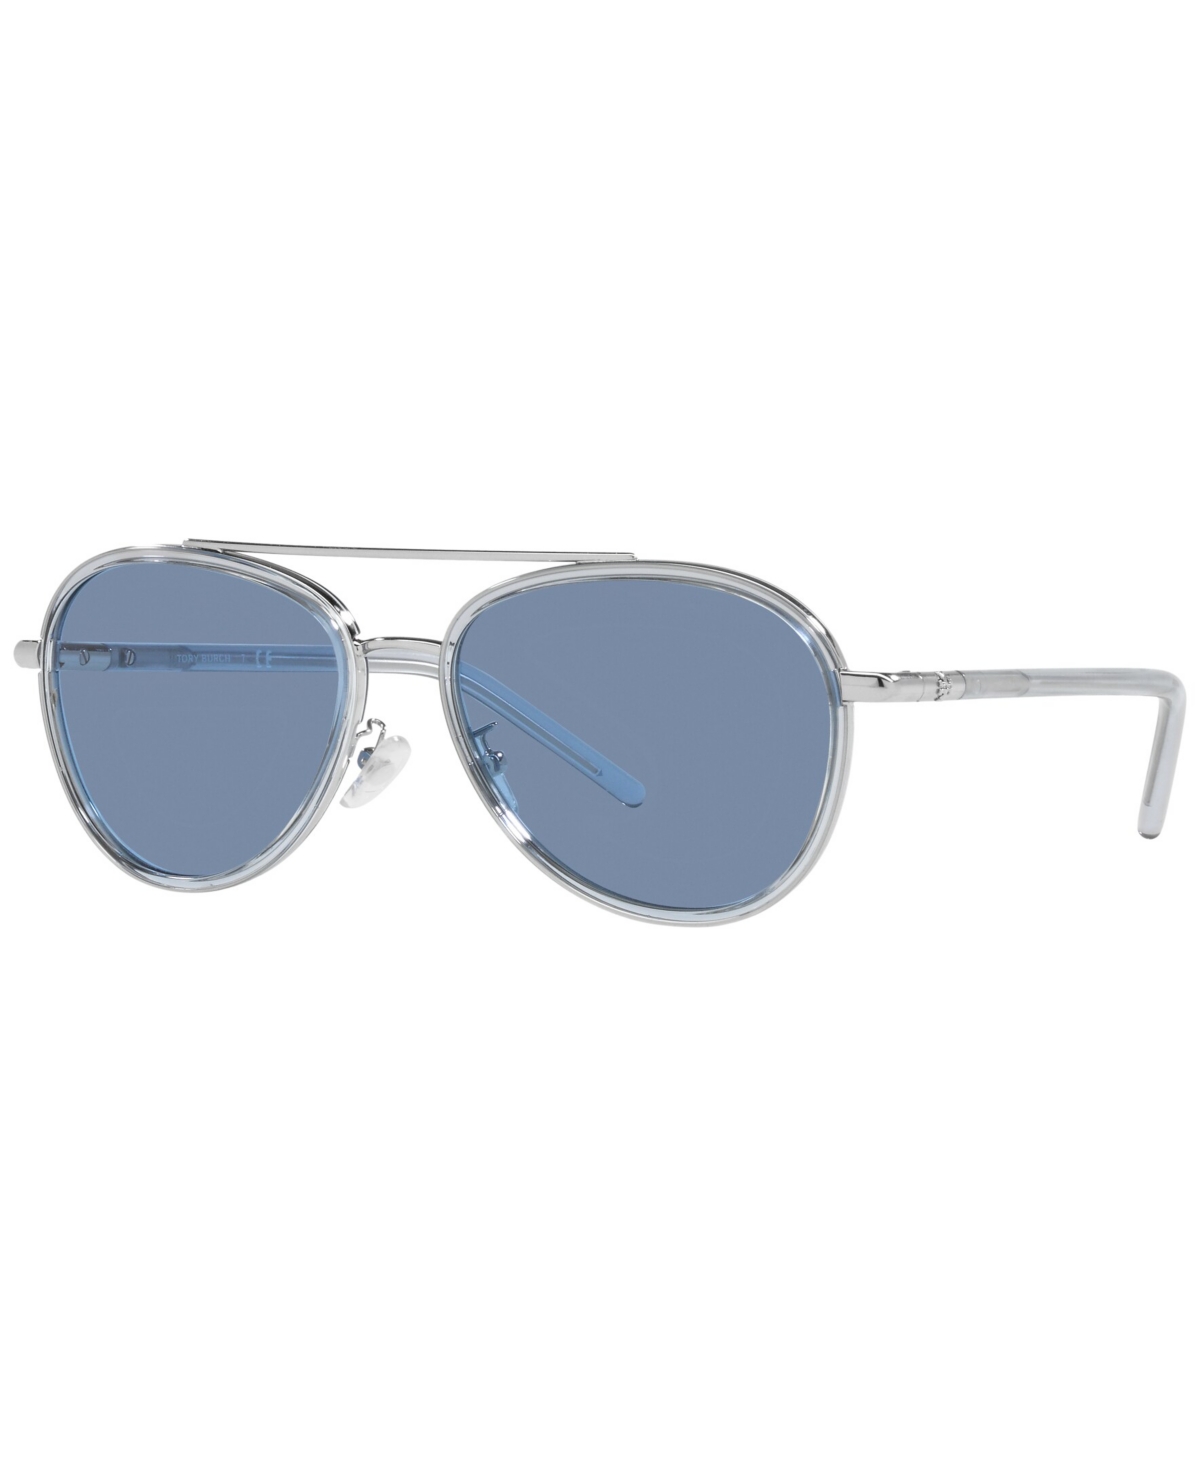 Tory Burch Women's Sunglasses Ty6089 In Transparent Azure,classic